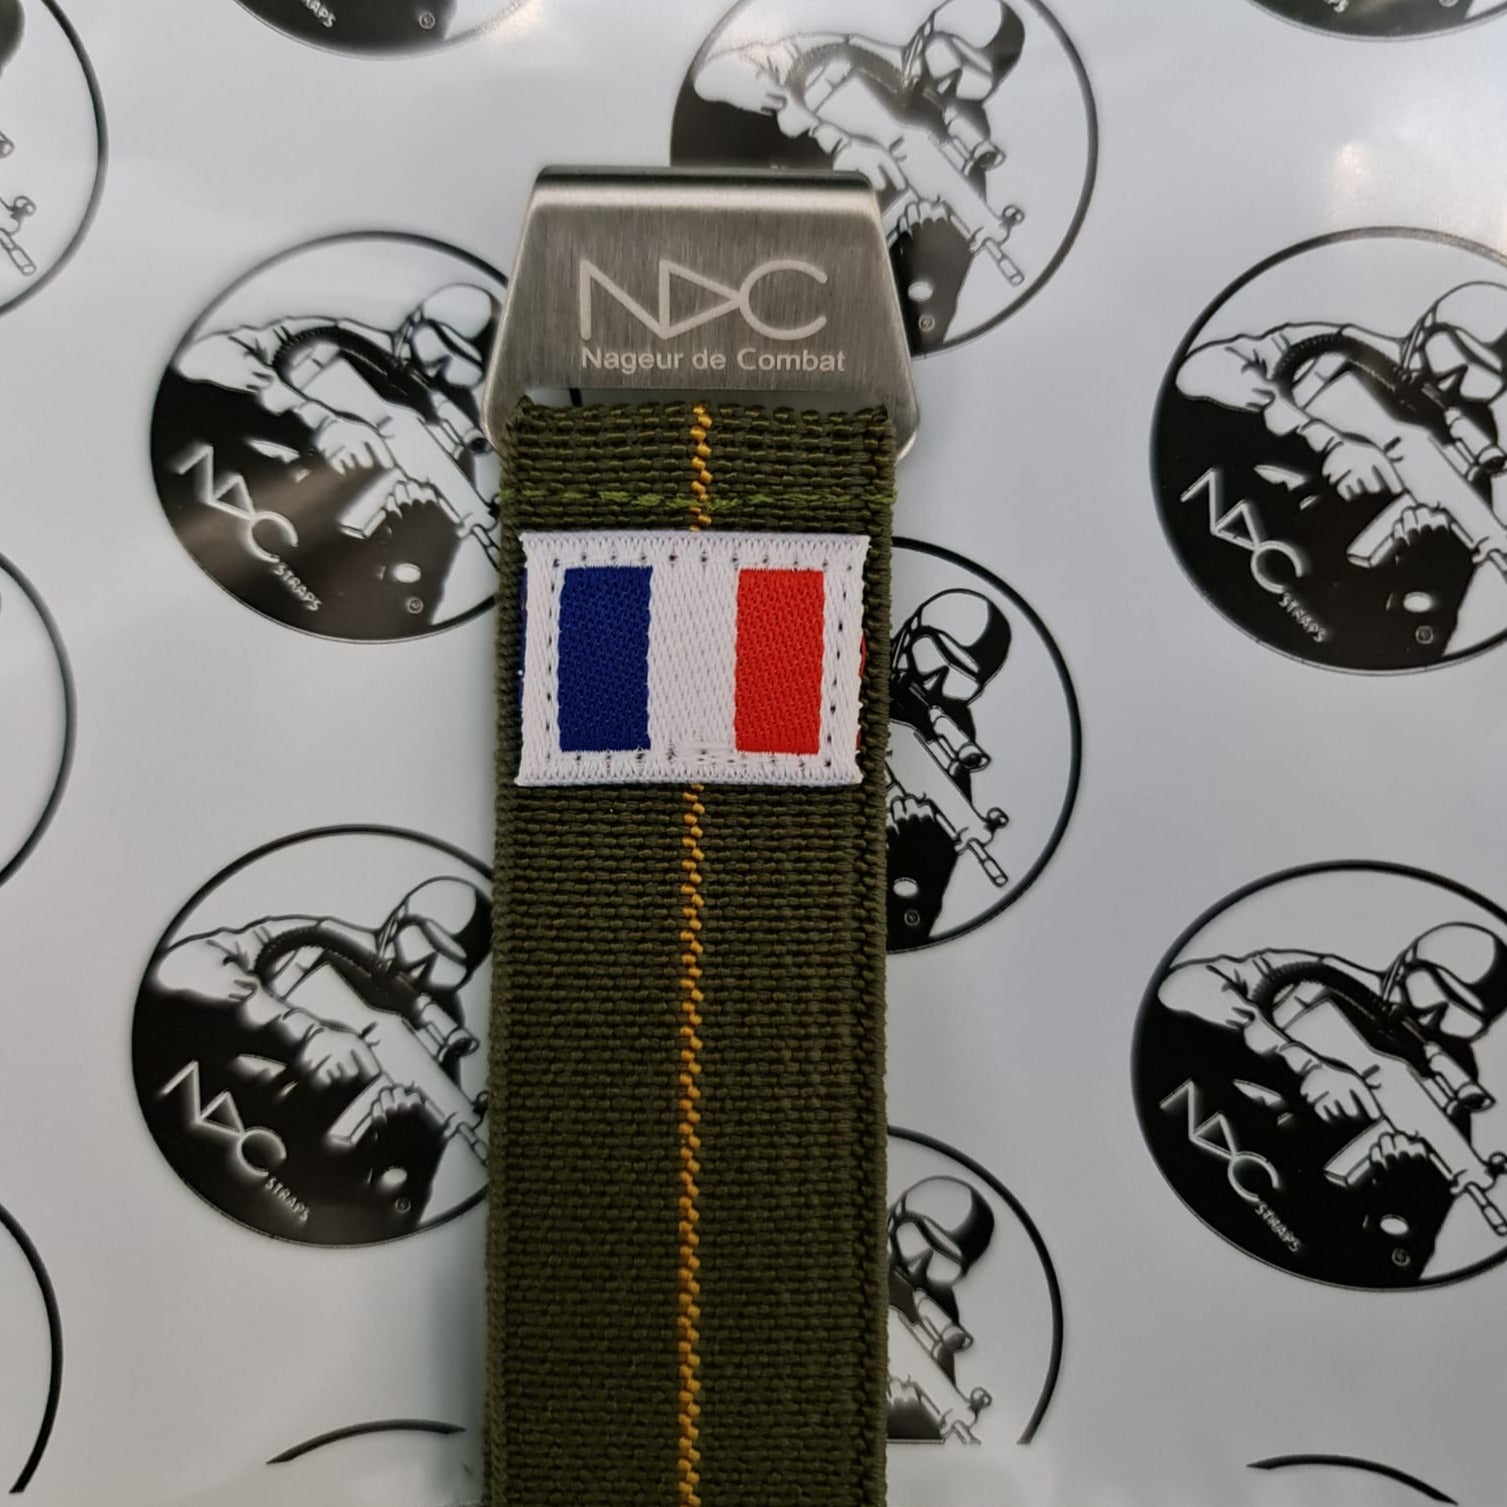 Original NDC strap - with French flag - NDC Straps